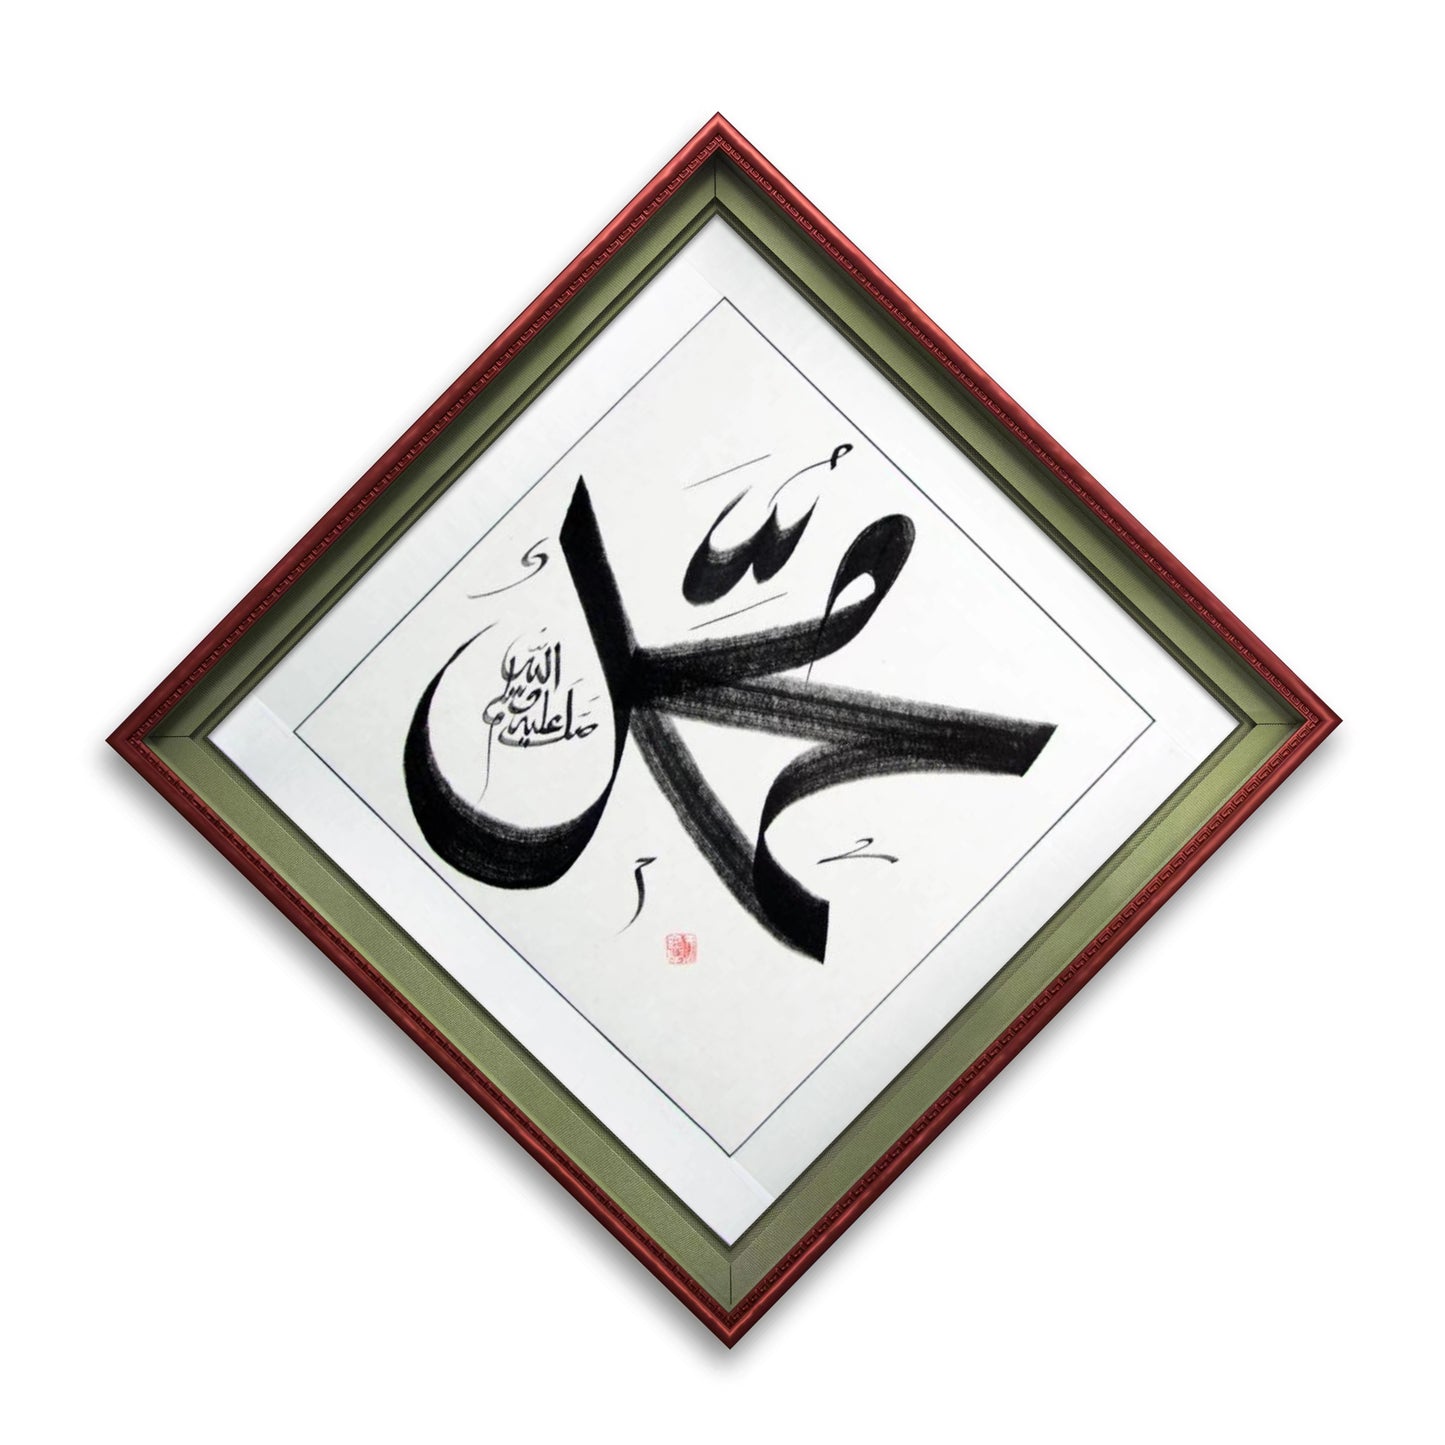 Allah (SWT) and Mohammad (PBUH) Handwriting Authentic Diamond Sini Calligraphy